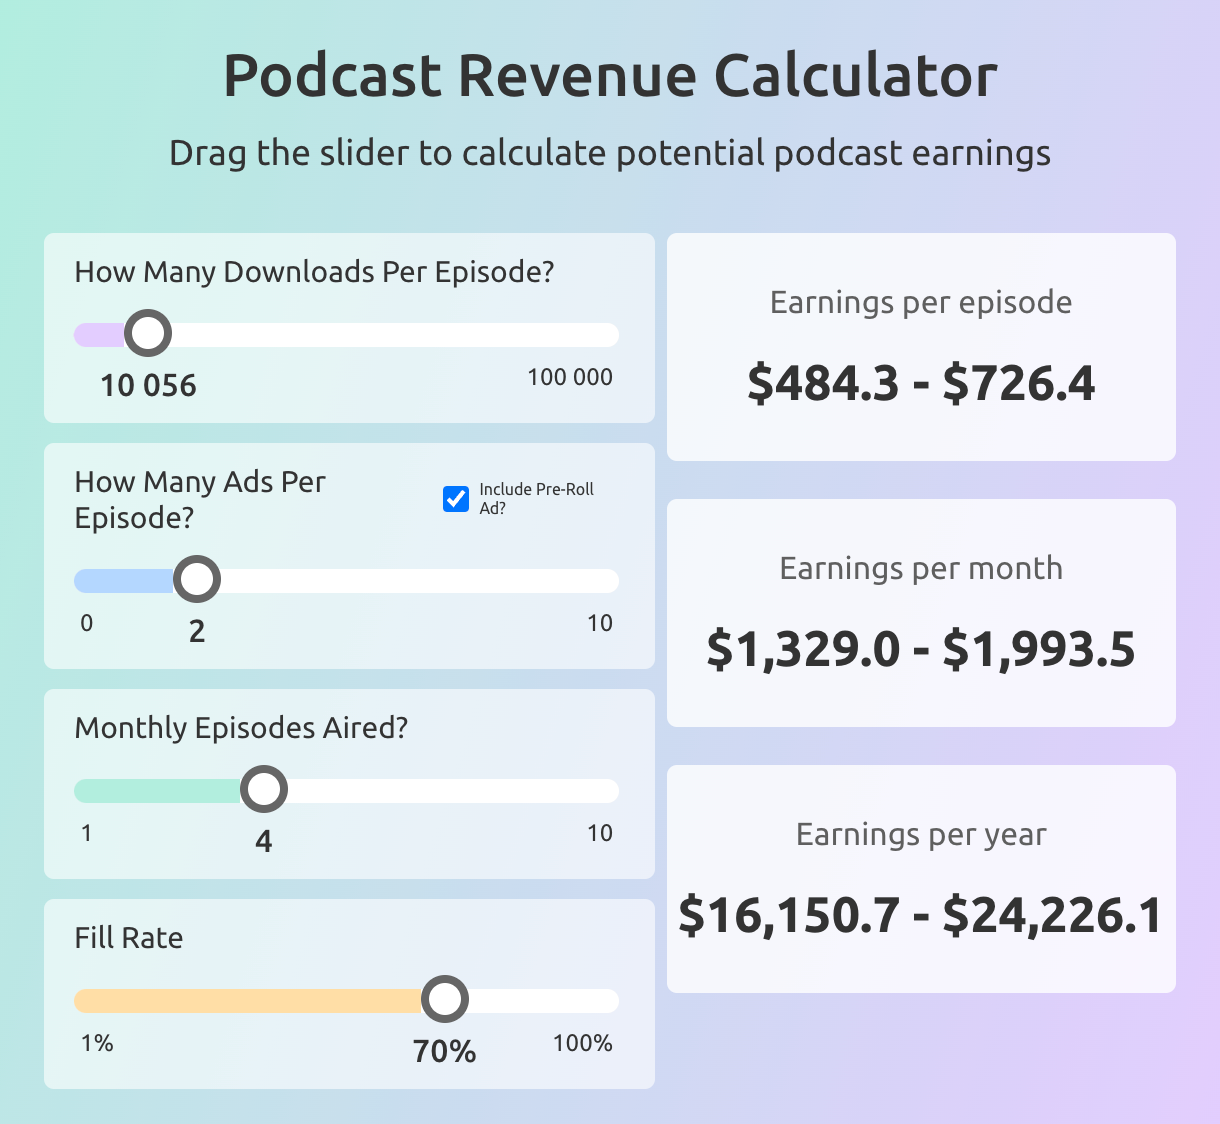 Podcast revenue calculator